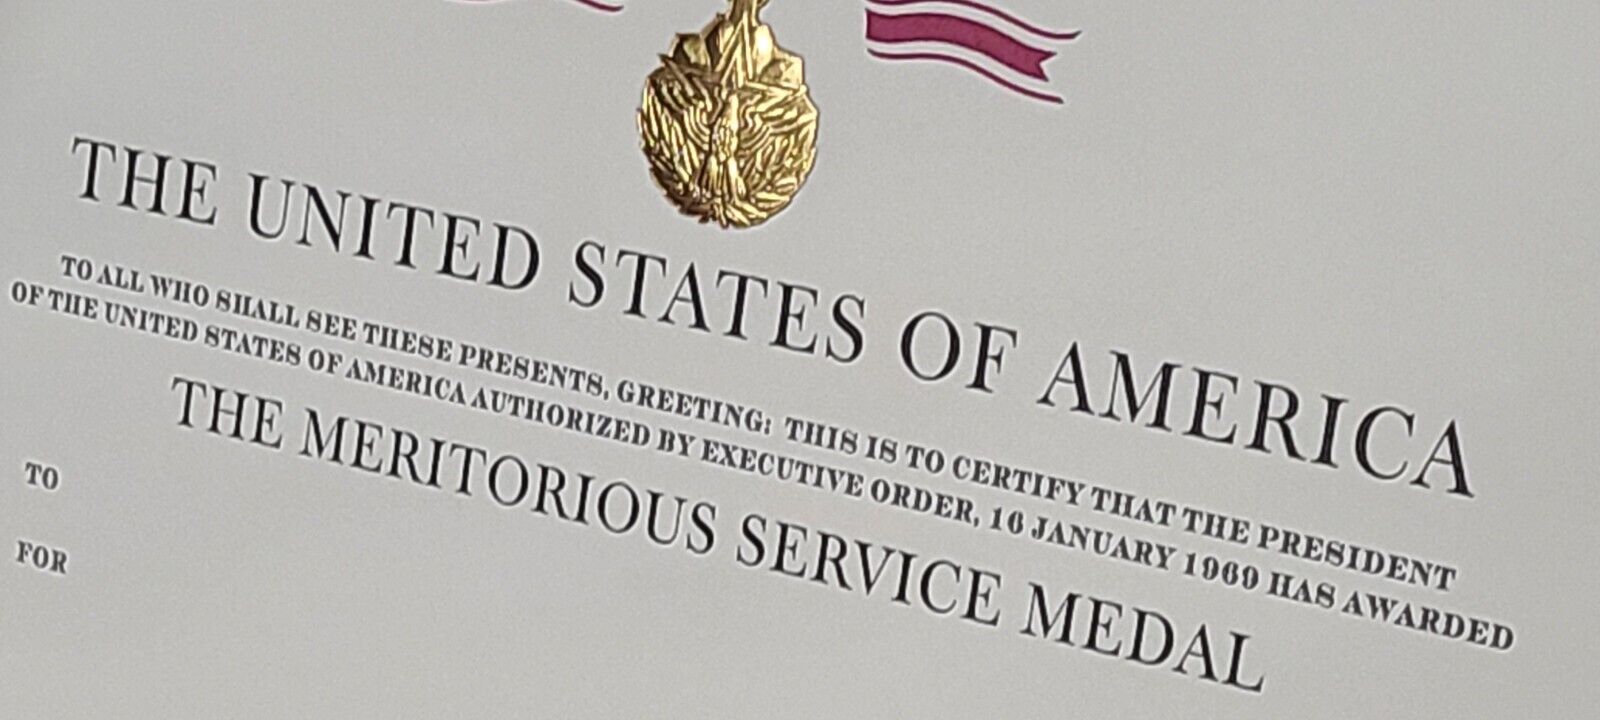 Original US Army Meritorious Service Medal Certificate (Original Issue).